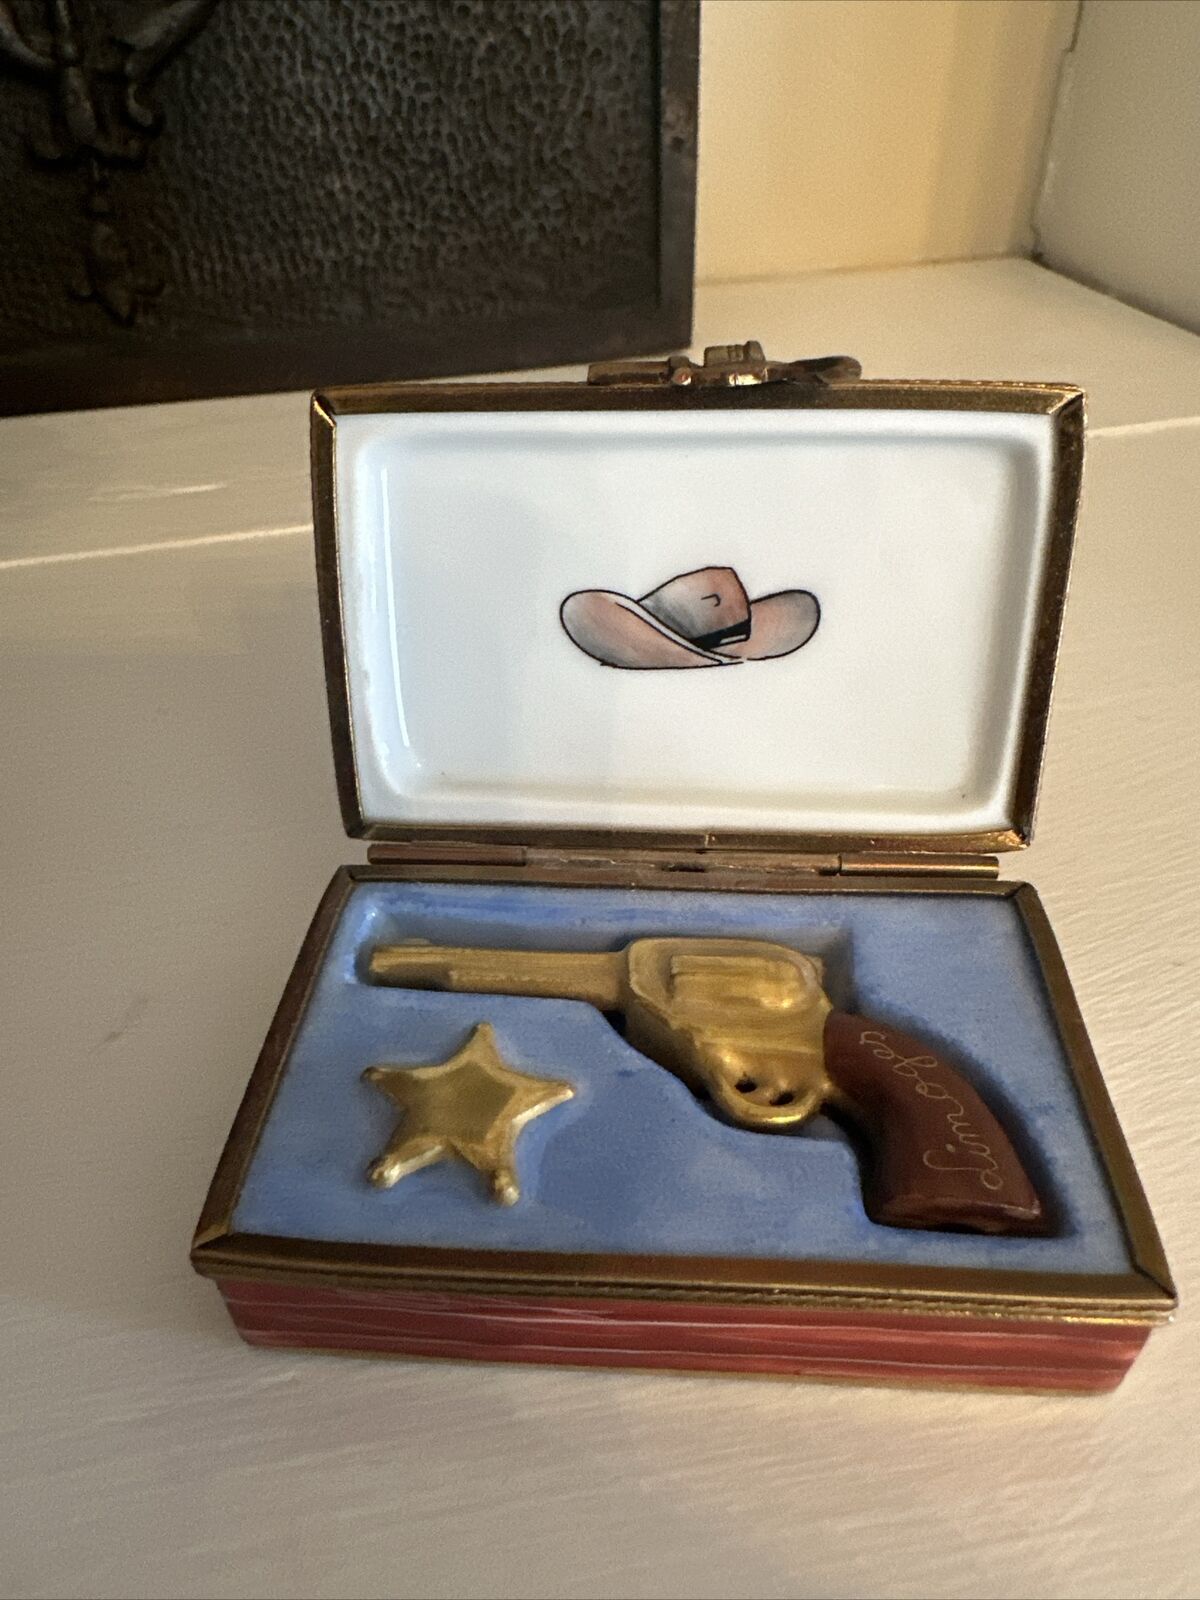 LIMOGES Peint Main Sheriff Gun in Wanted Poster Case Box Trinket Marque Deposee